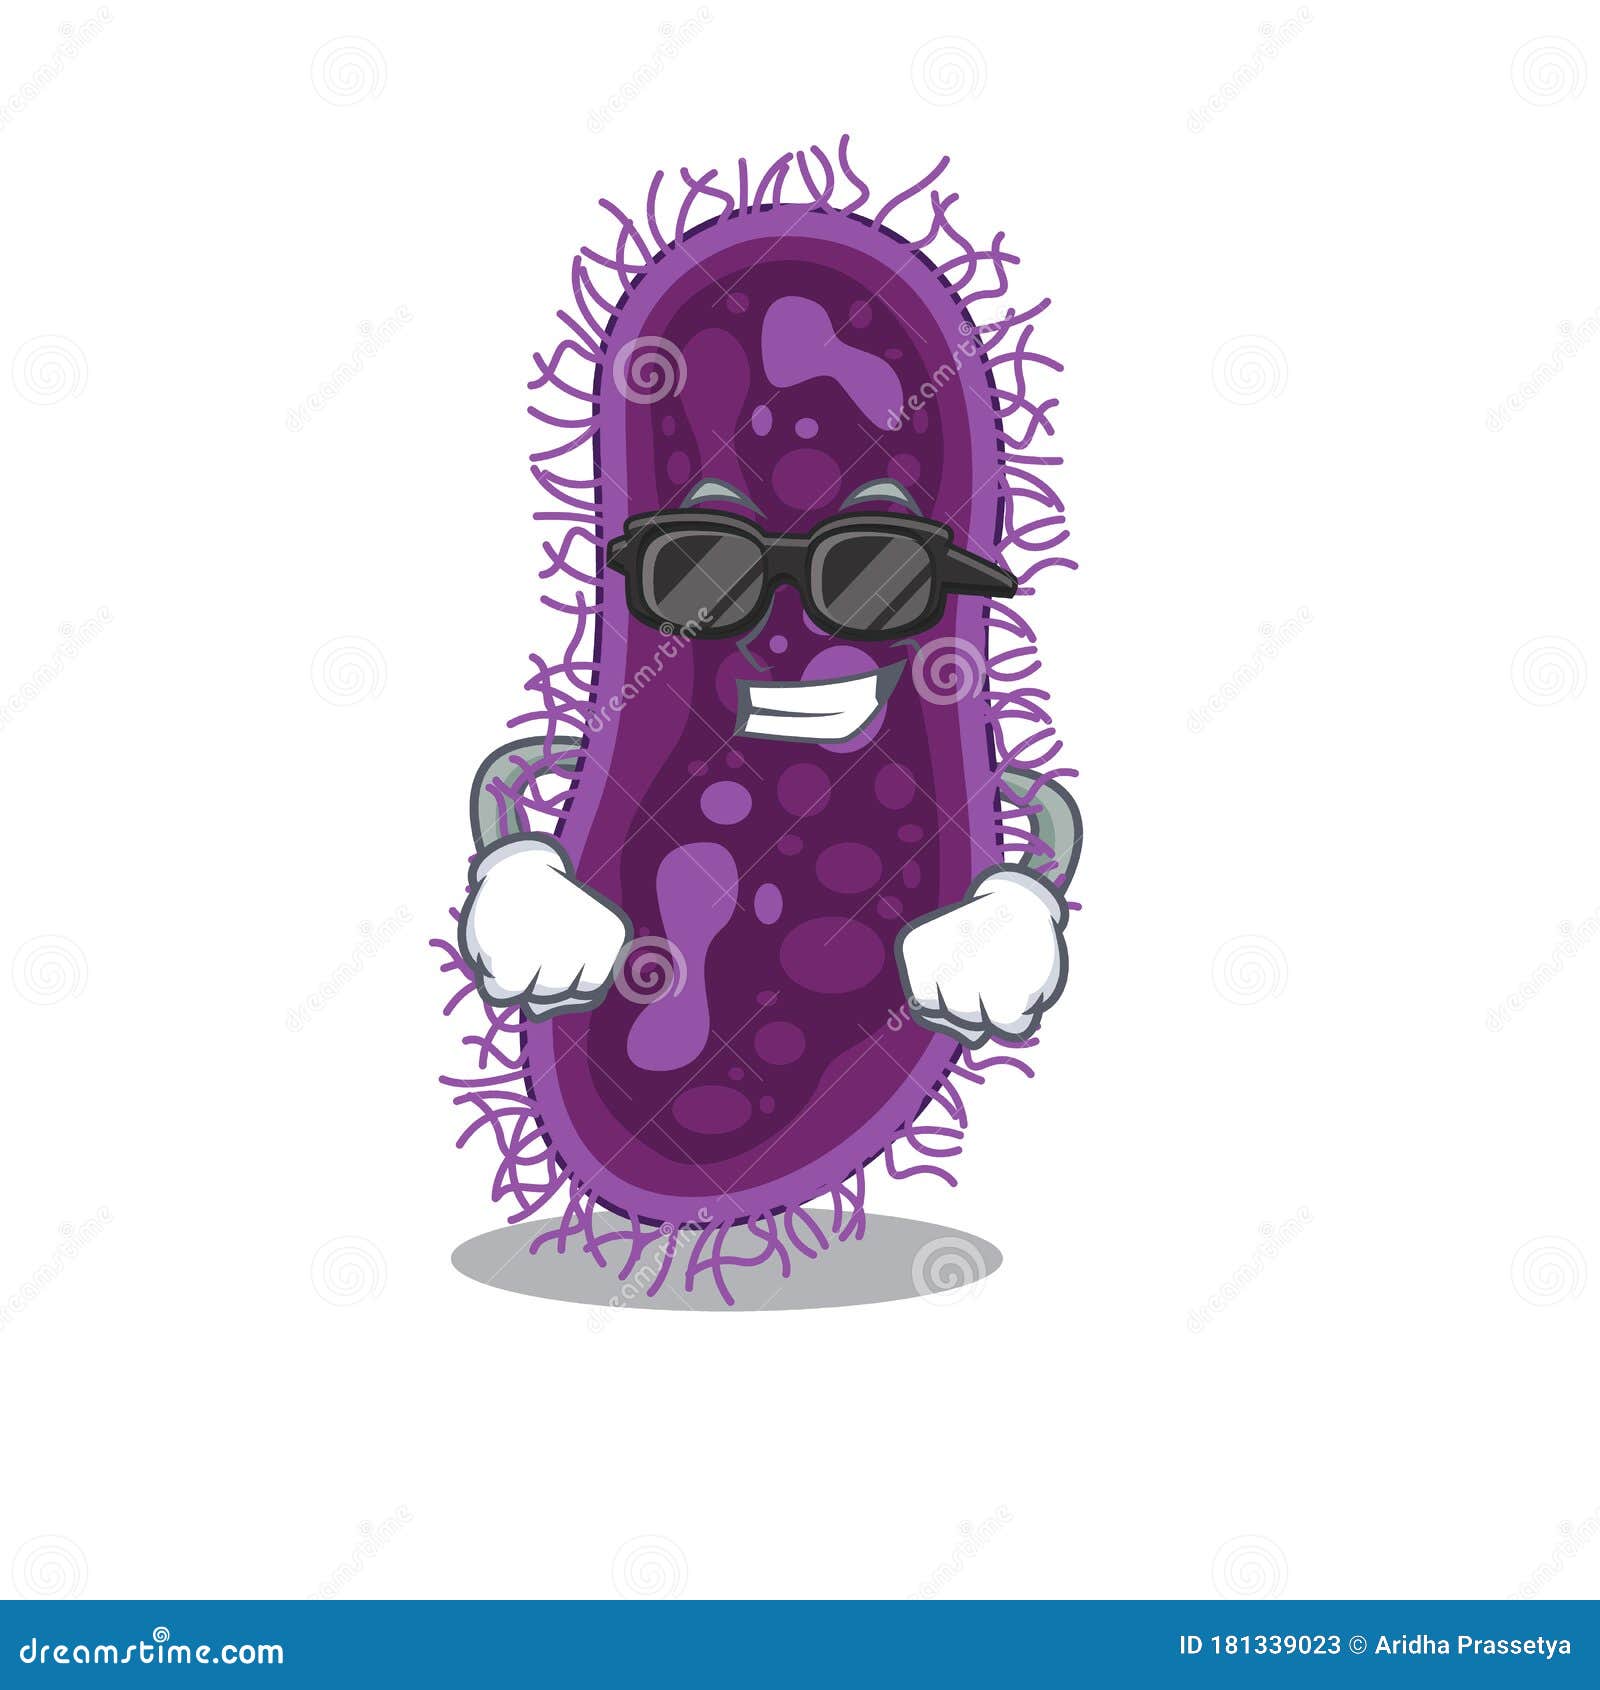 Cool Lactobacillus Rhamnosus Bacteria Cartoon Character Wearing ...